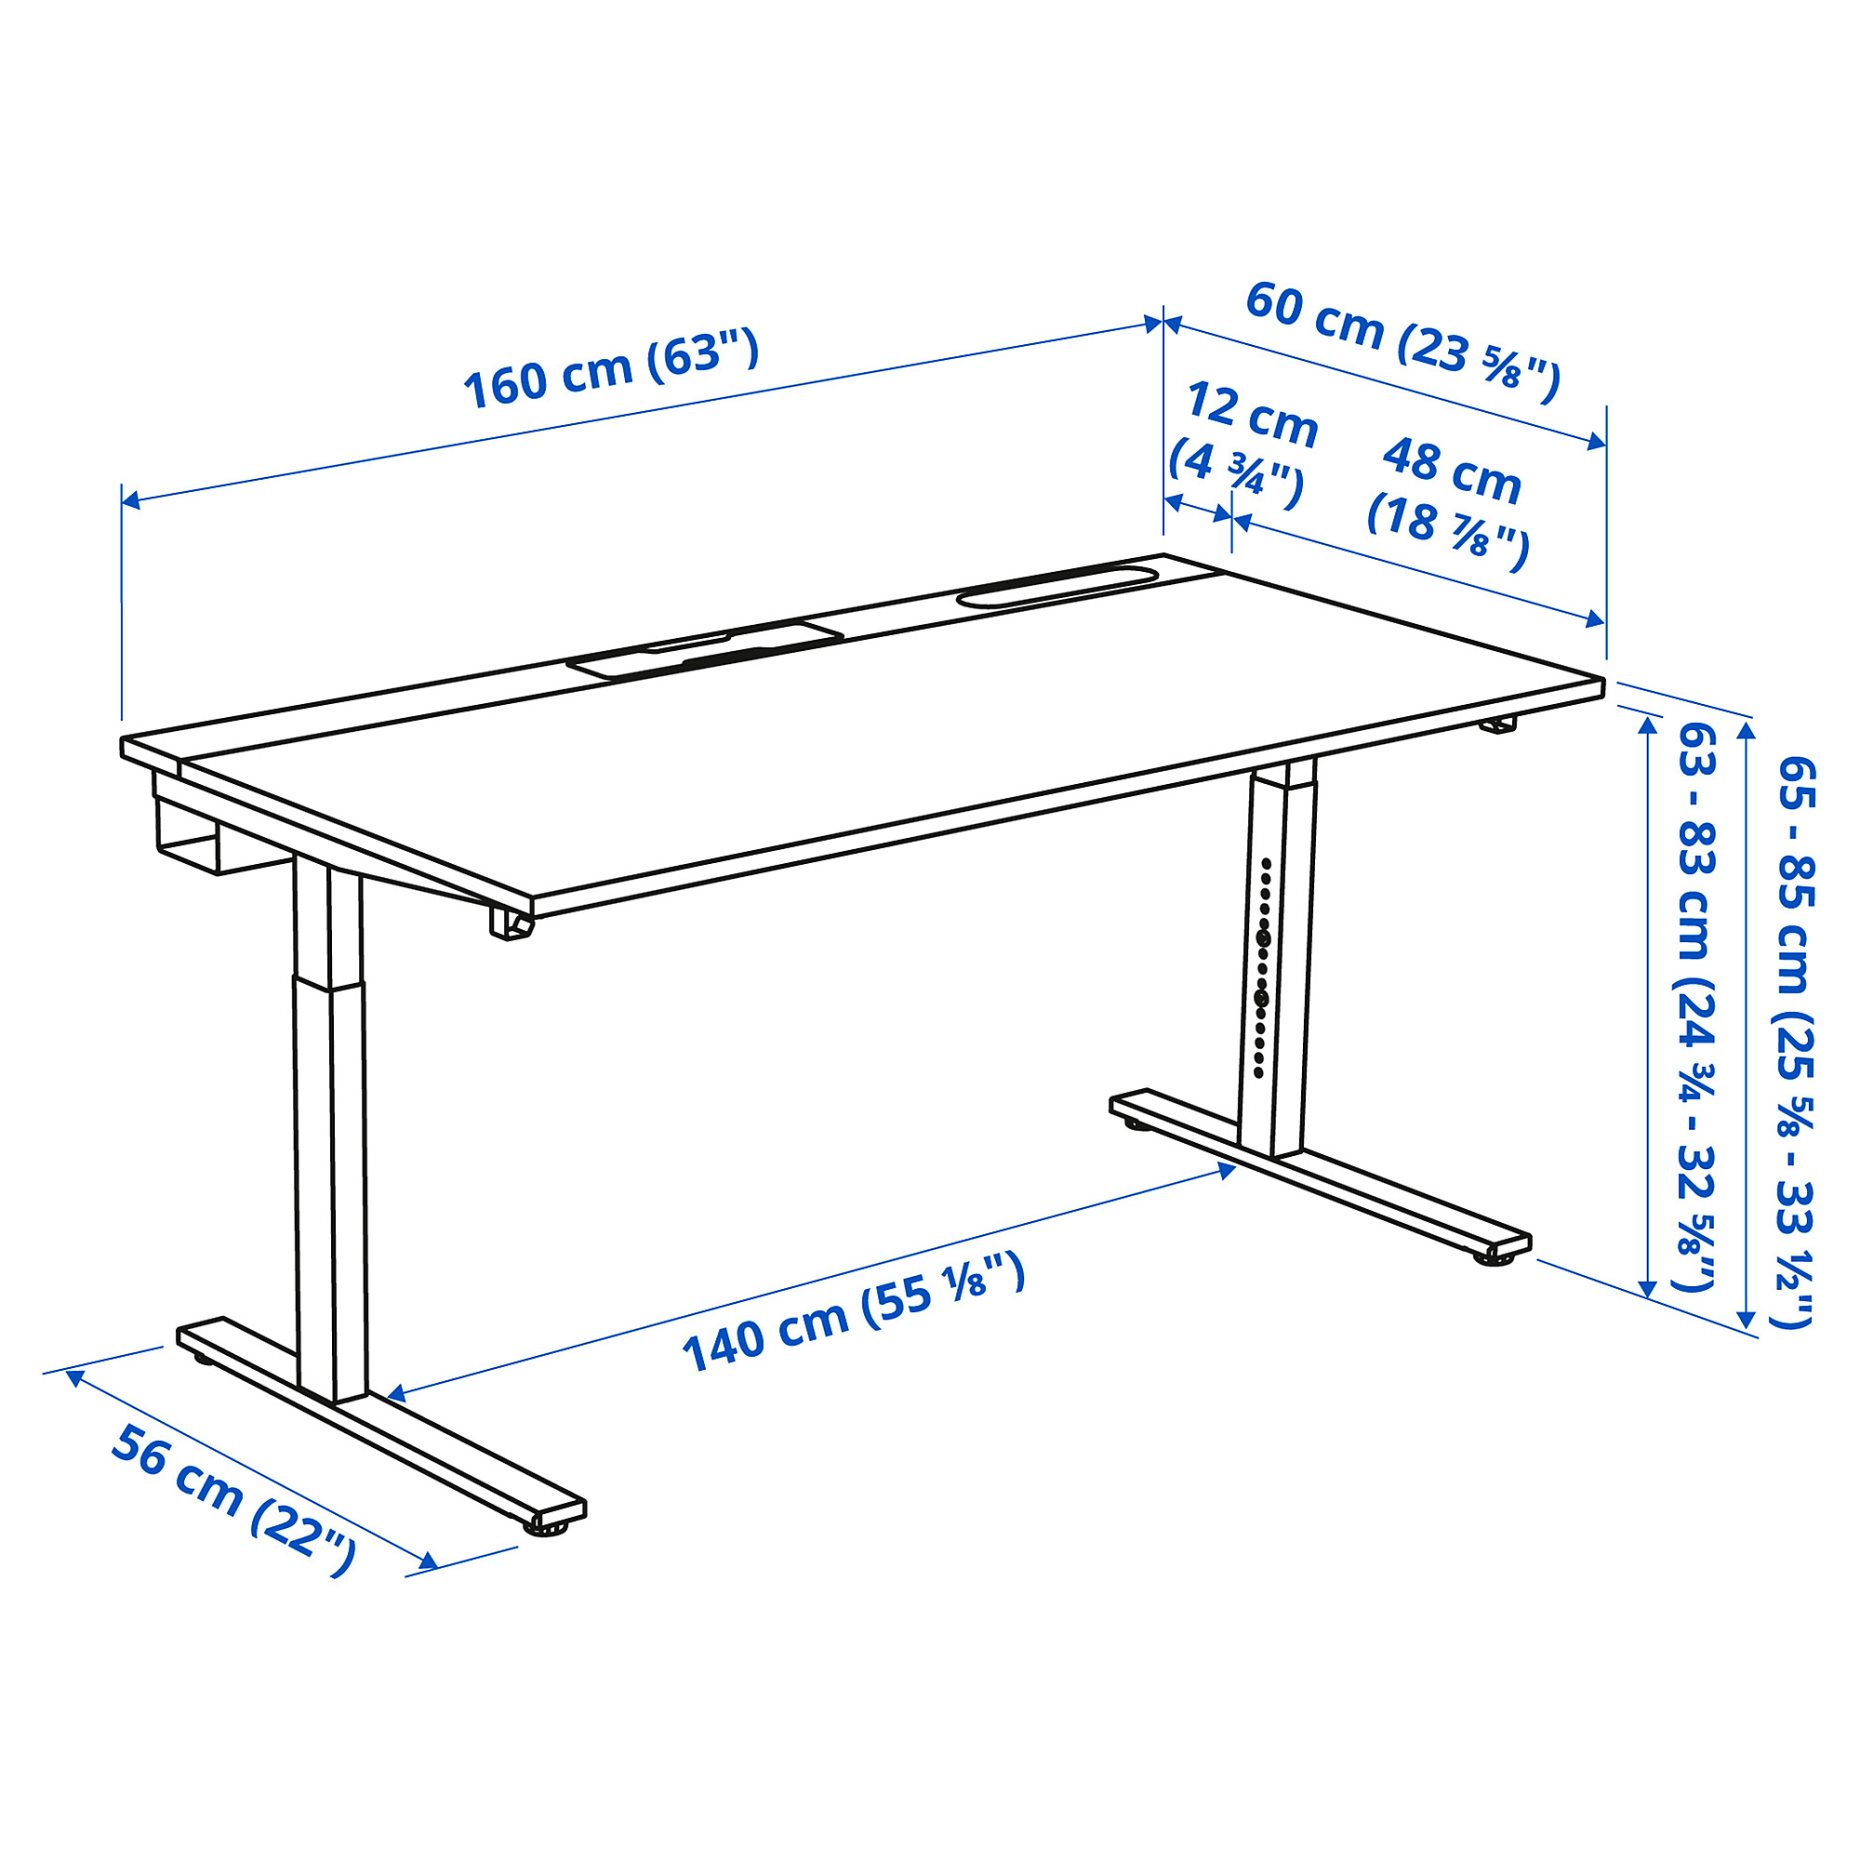 MITTZON, desk, 160x60 cm, 495.290.14